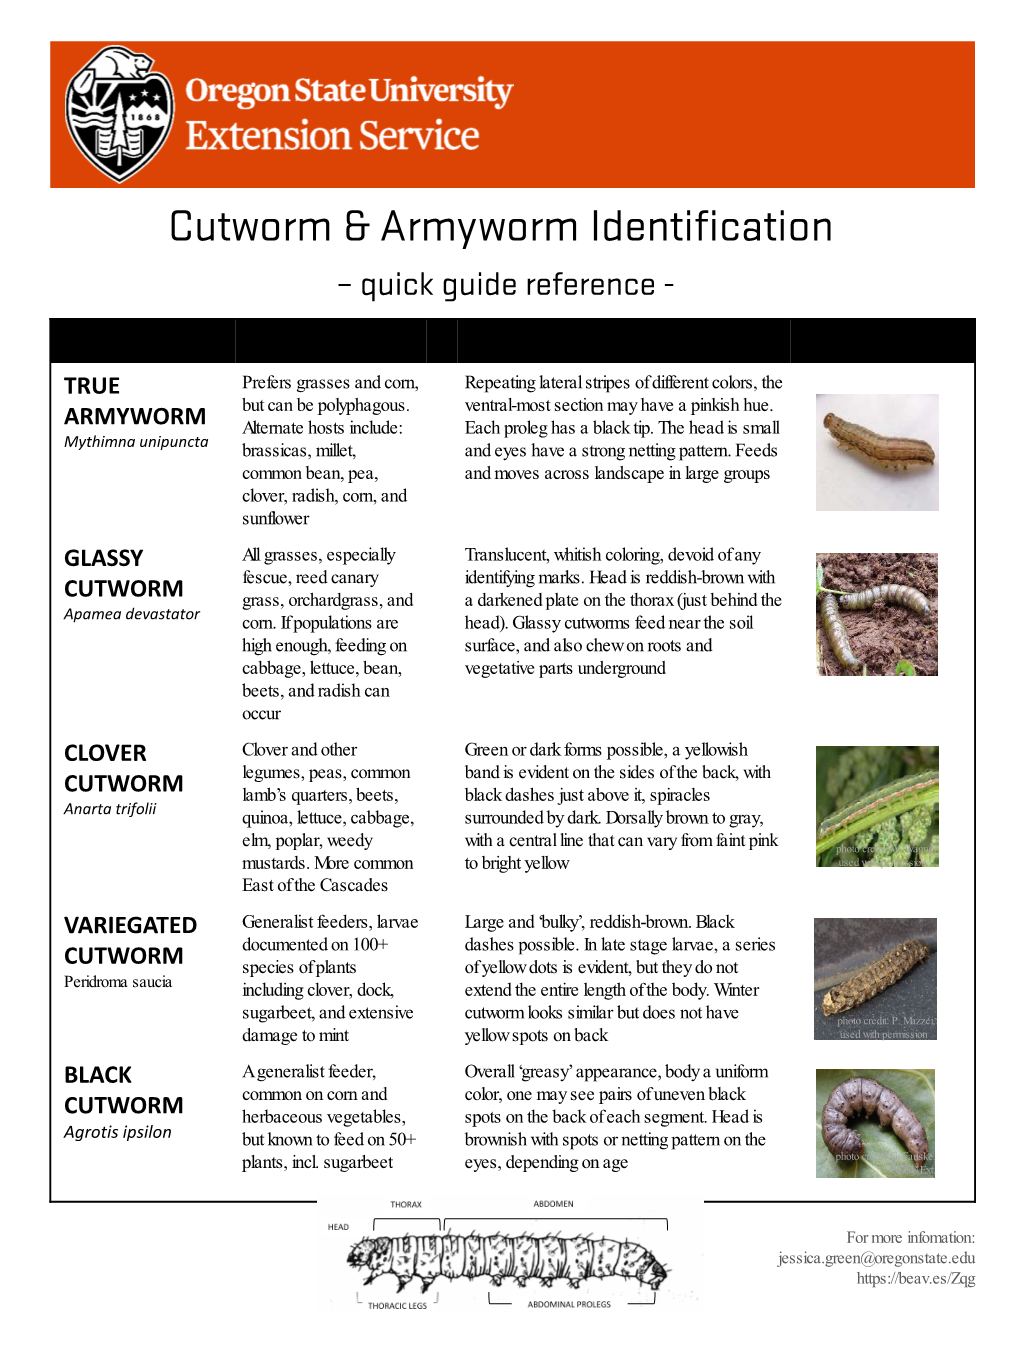 Army Cutworm Info 13June18jg